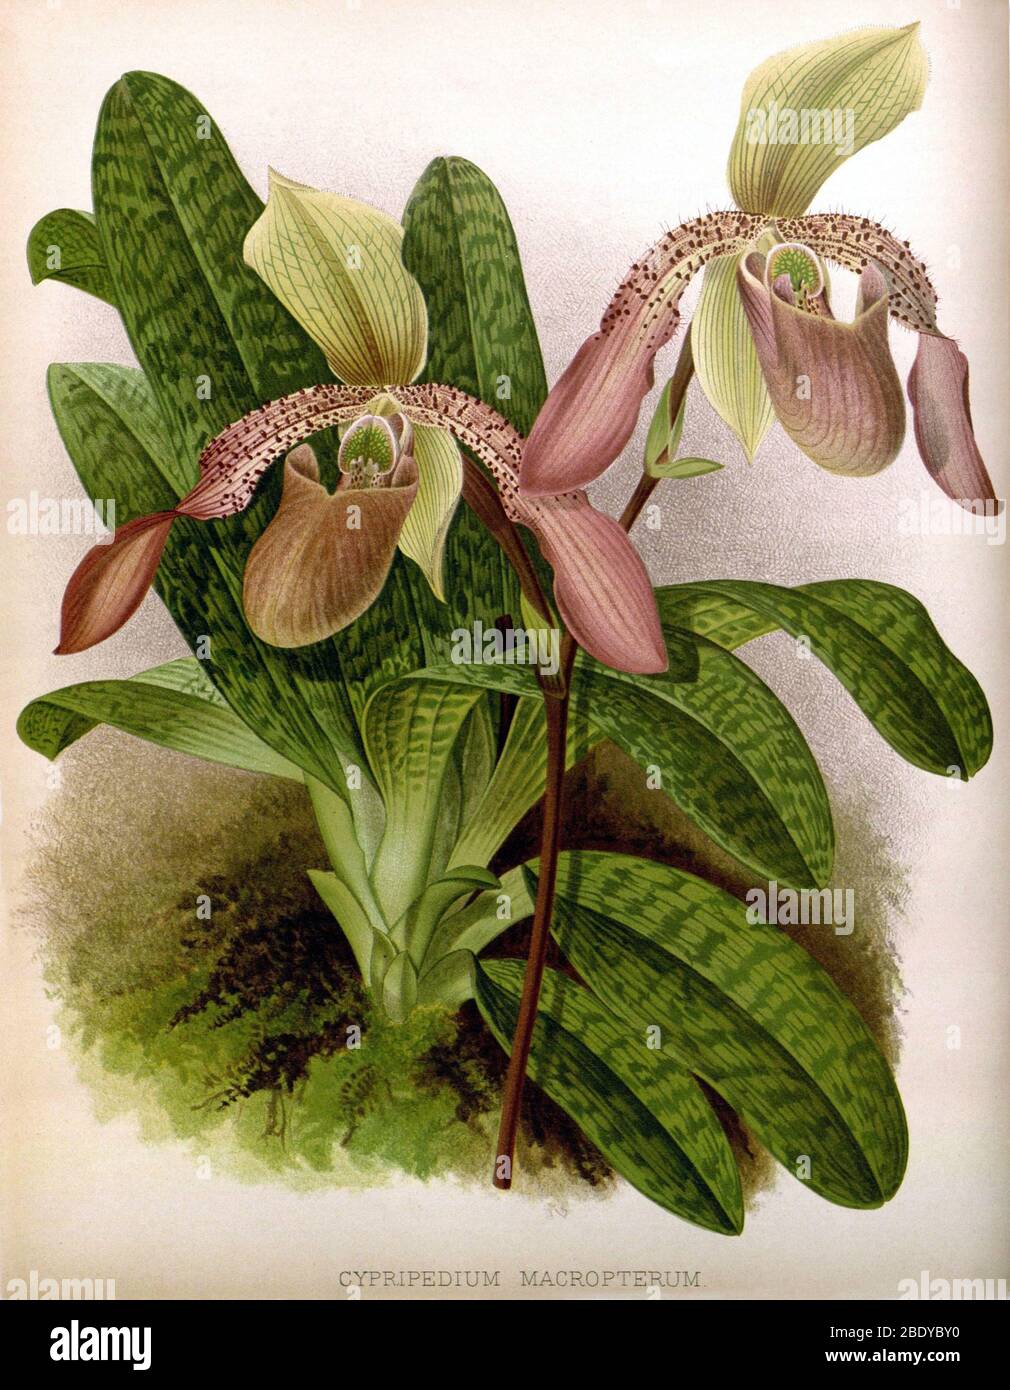 Orchid, Cypripedium macropterum, 1891 Banque D'Images